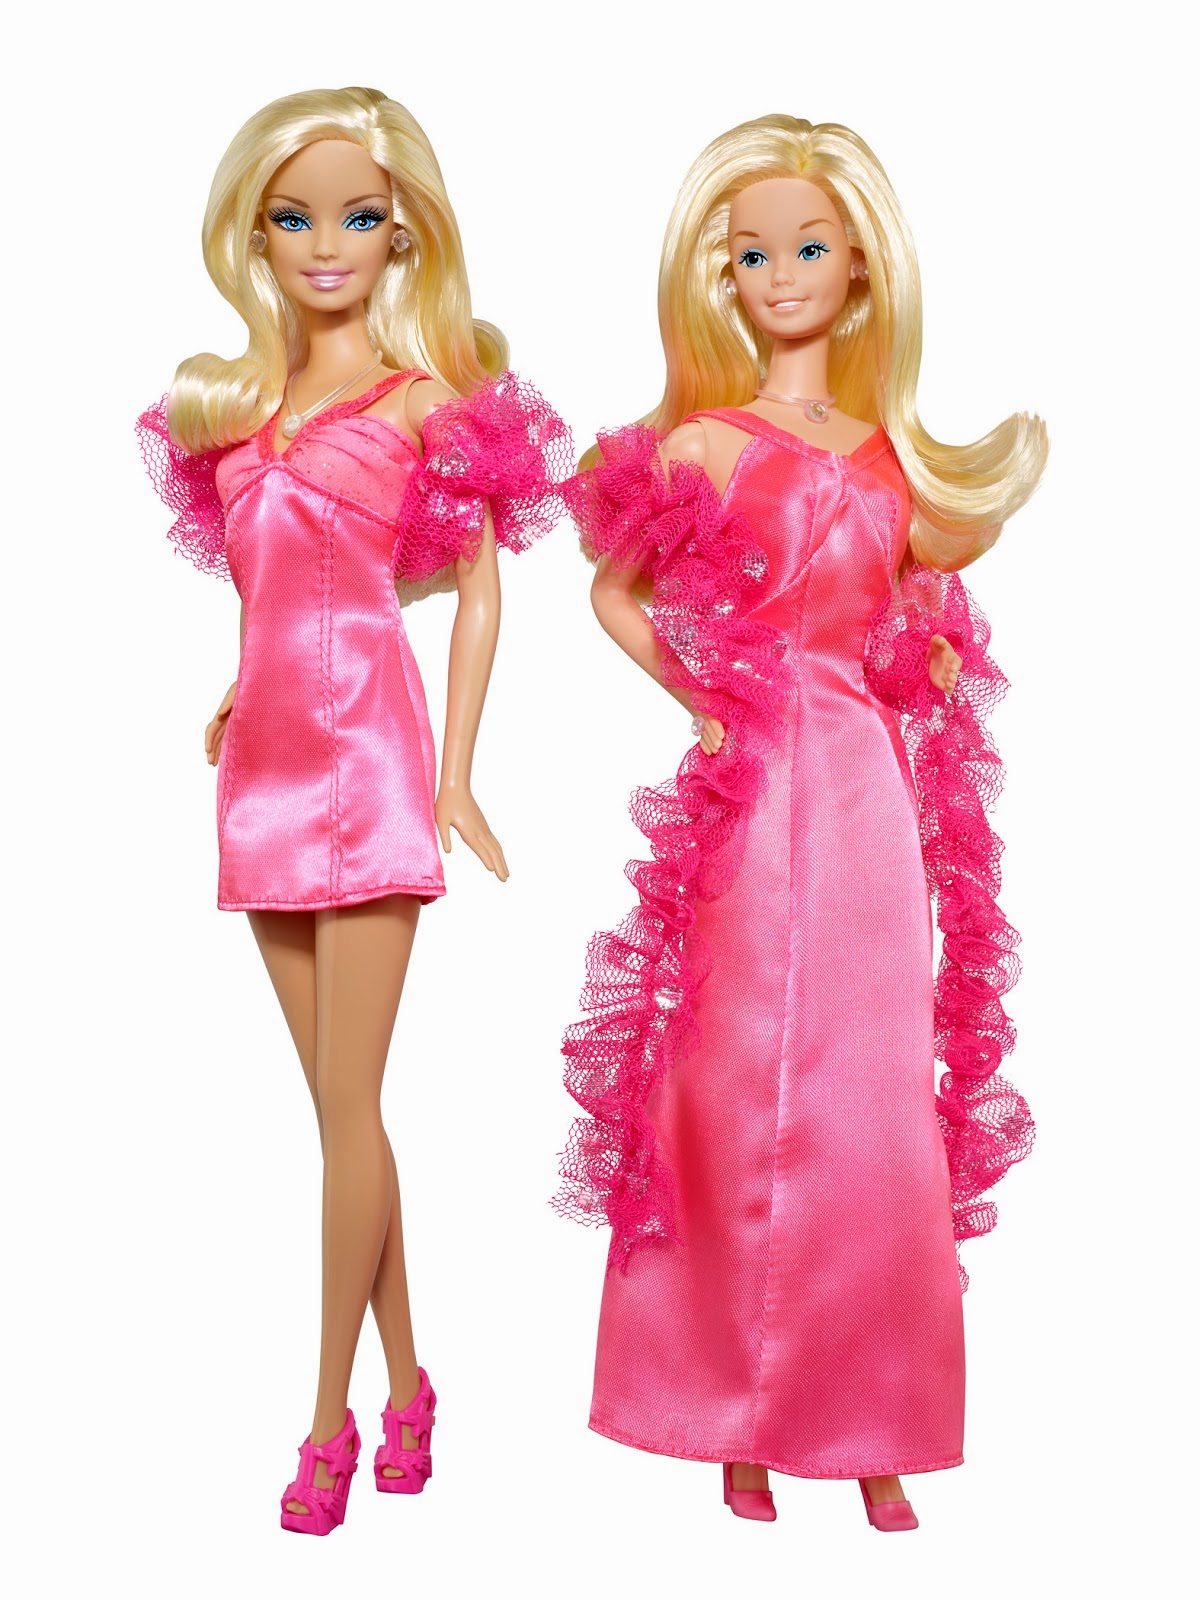 Kumpulan Gambar Dp Bbm Barbie Cantik Kumpulan Gambar Meme Lucu